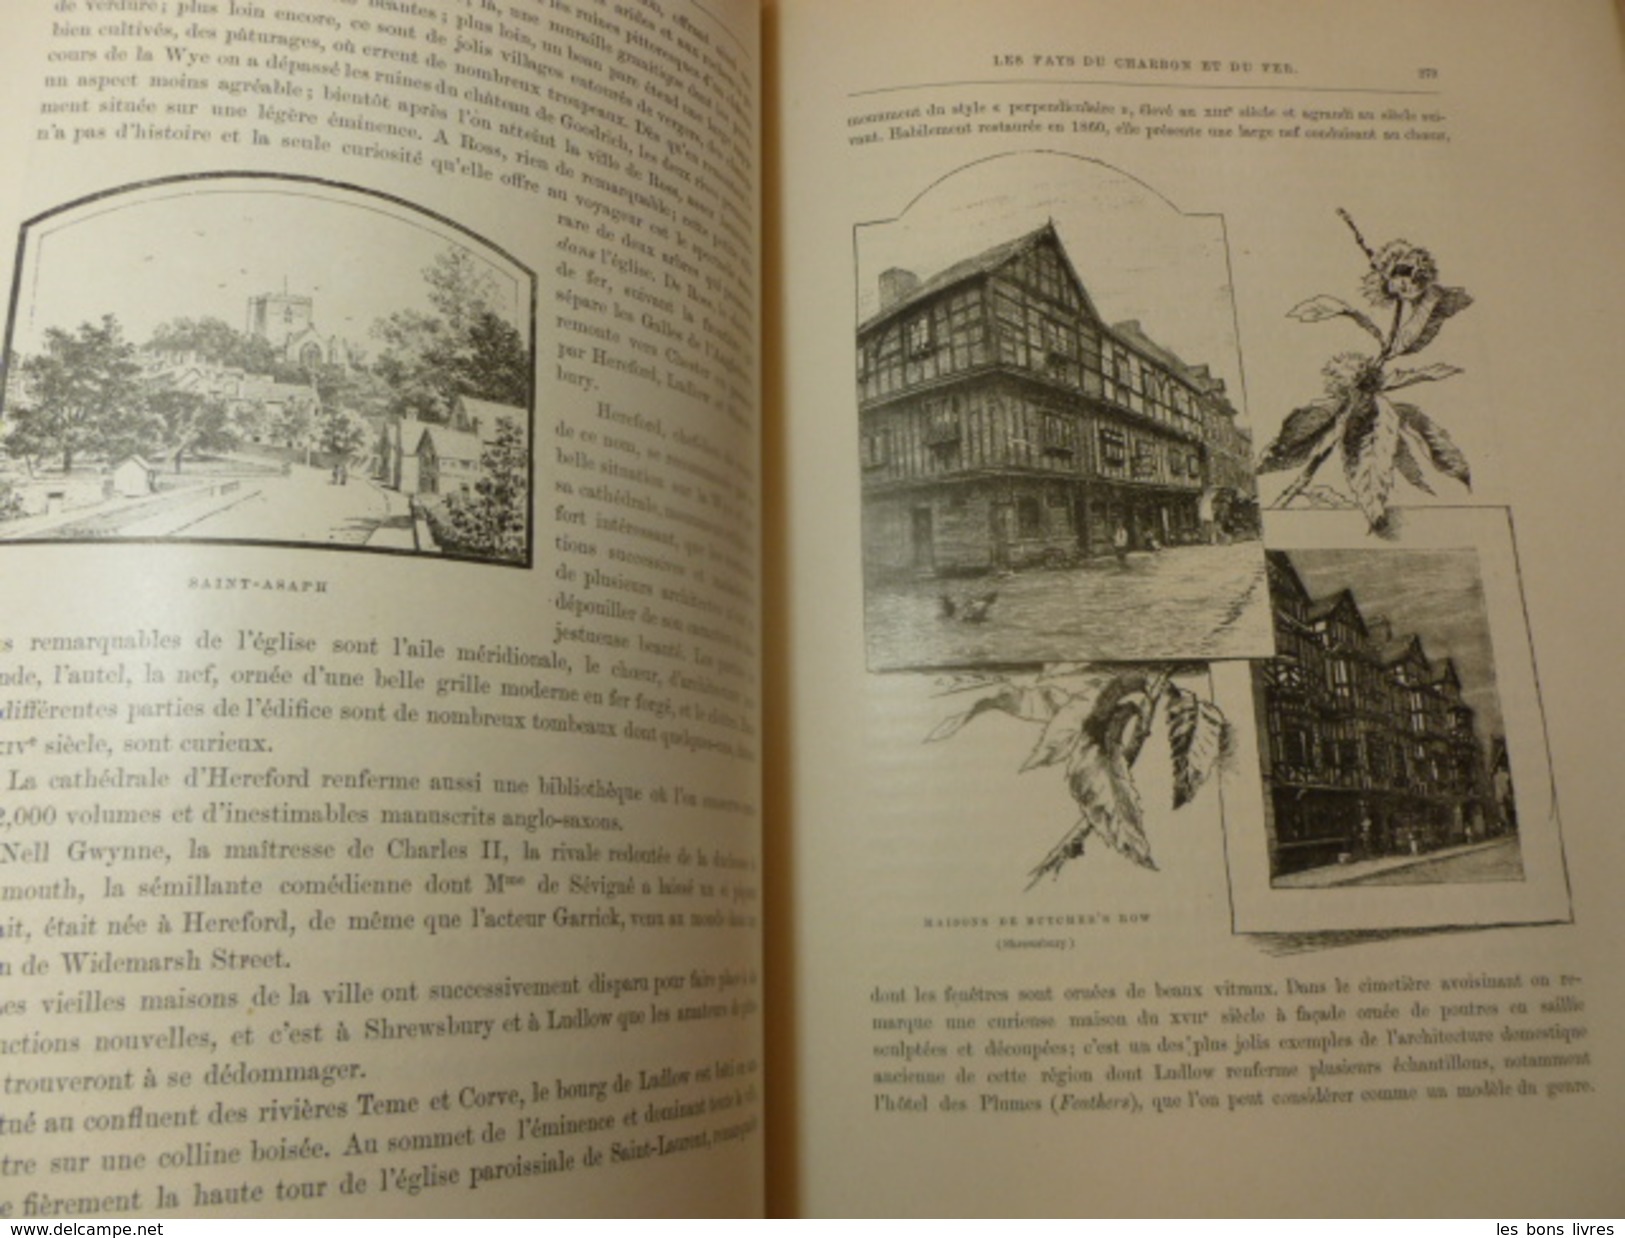 L'ANGLETERRE, L&rsquo;ÉCOSSE ET L'IRLANDE P.Villars 600 gravures fort vol in-4